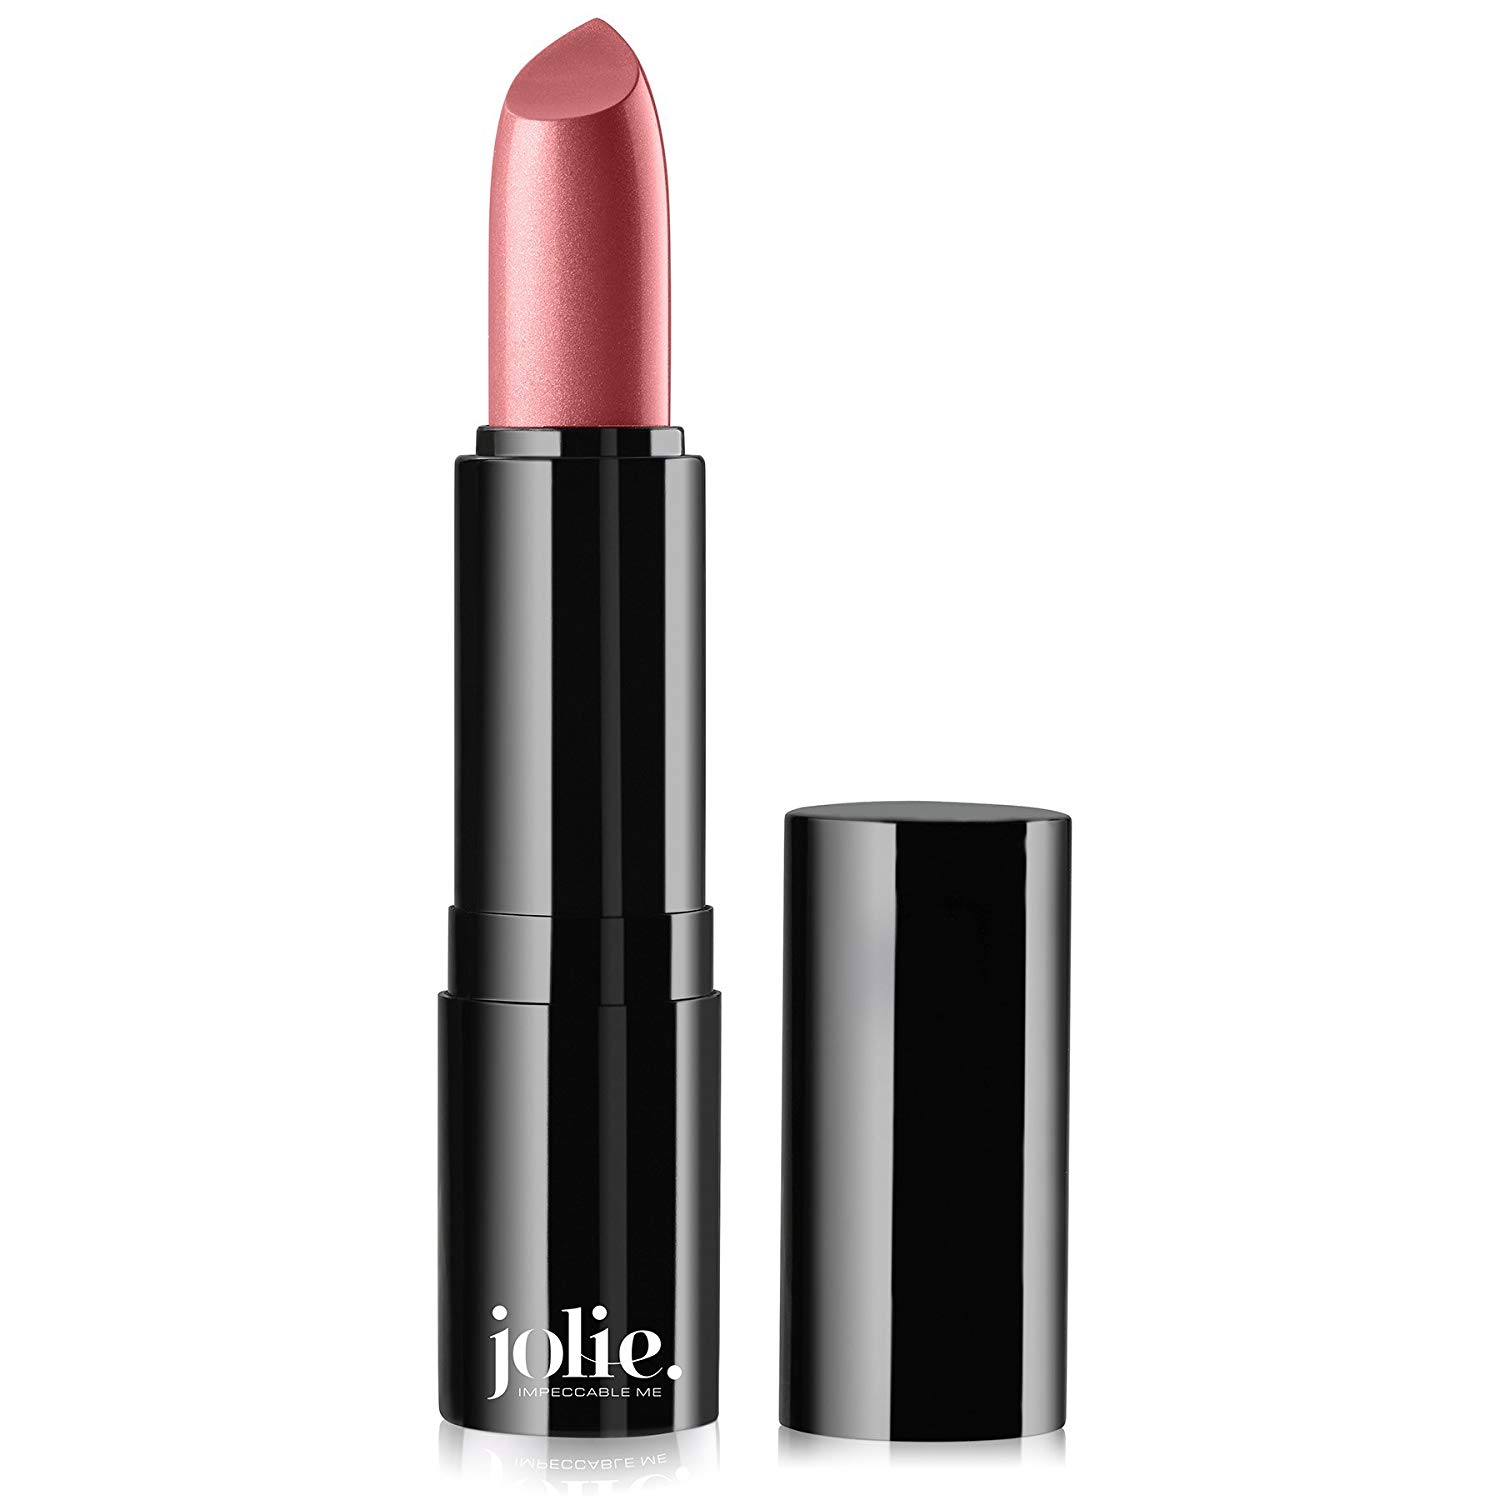 Price:$18.00 Jolie Color-Rich Satin Lipstick (Madison Avenue)